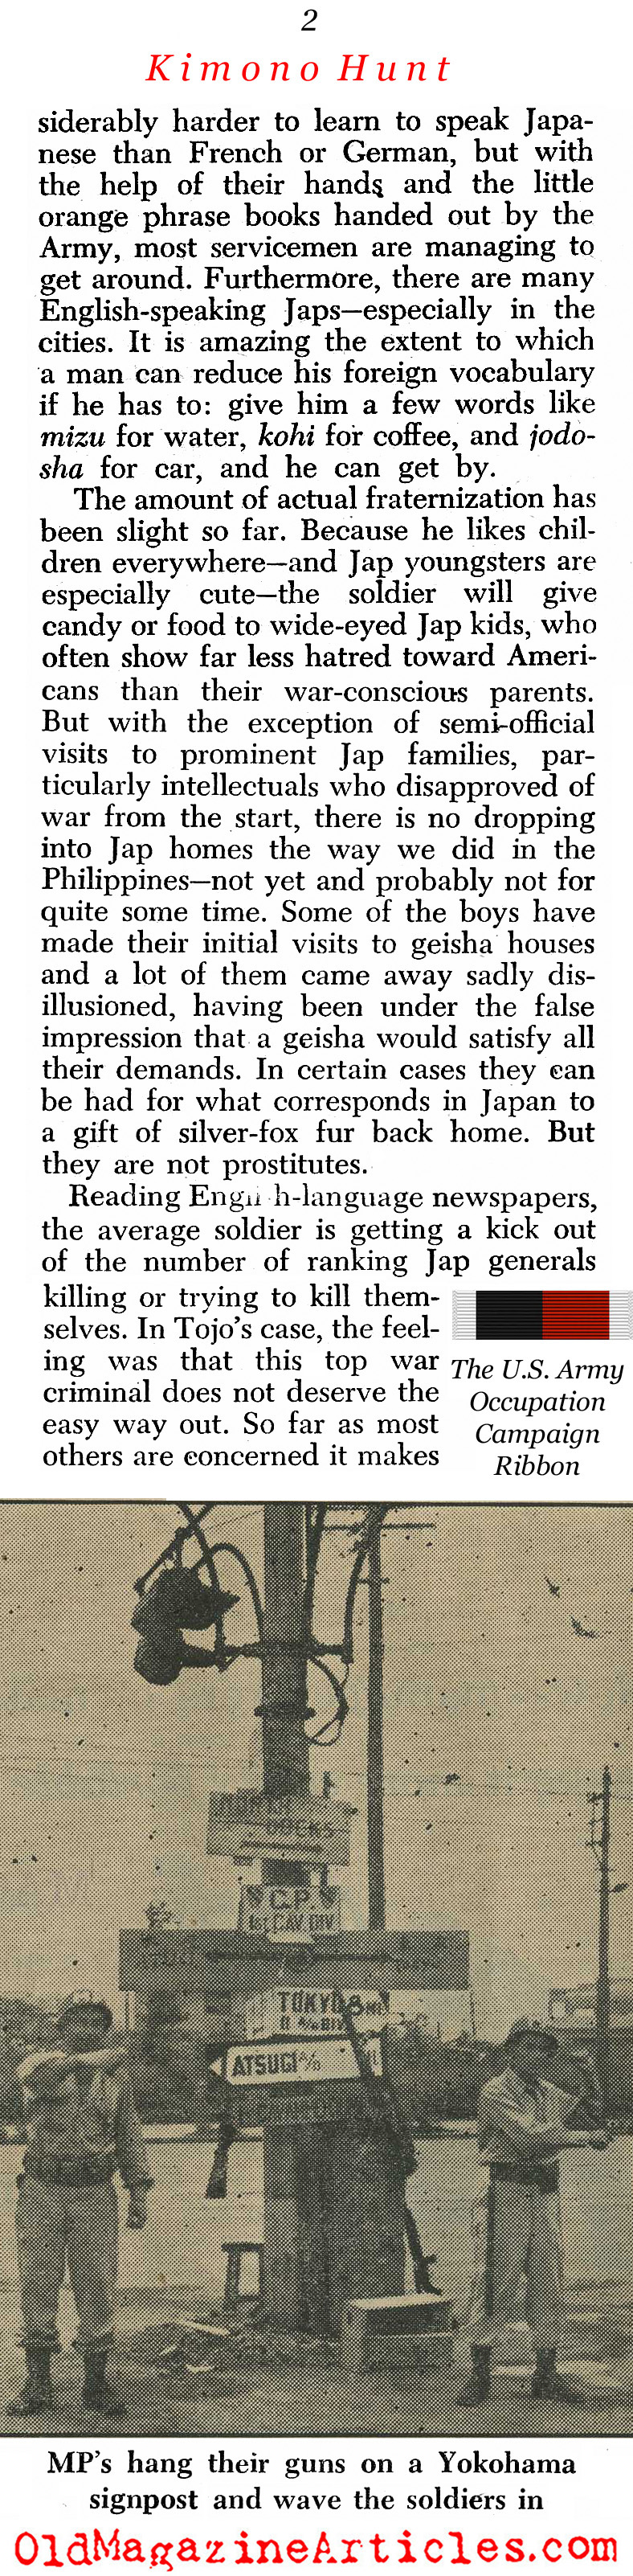 A GI View of Japan (Newsweek Magazine, 1945)